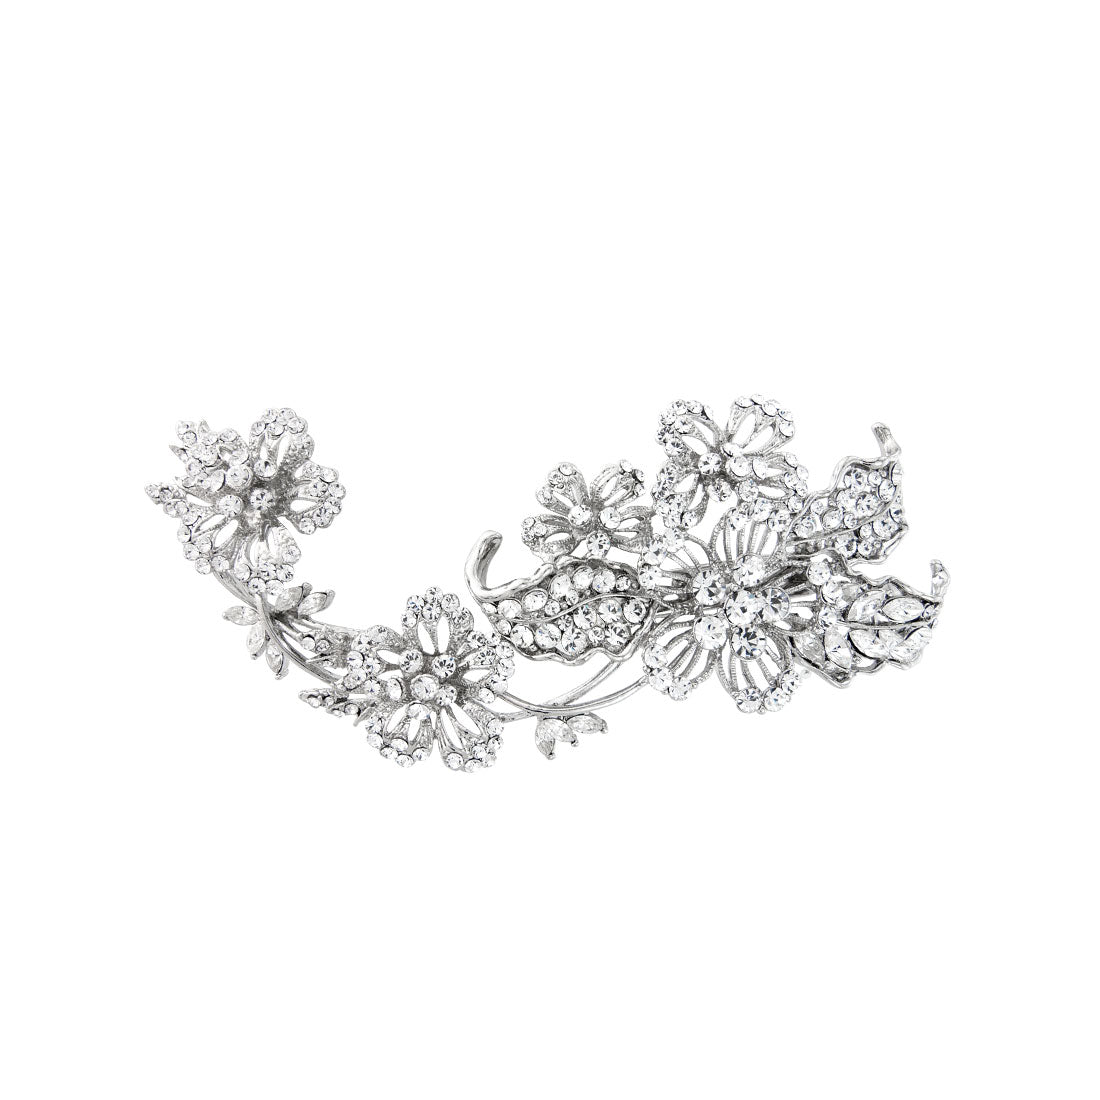 Vintage Fantasy Crystal Flower Wedding Headpiece